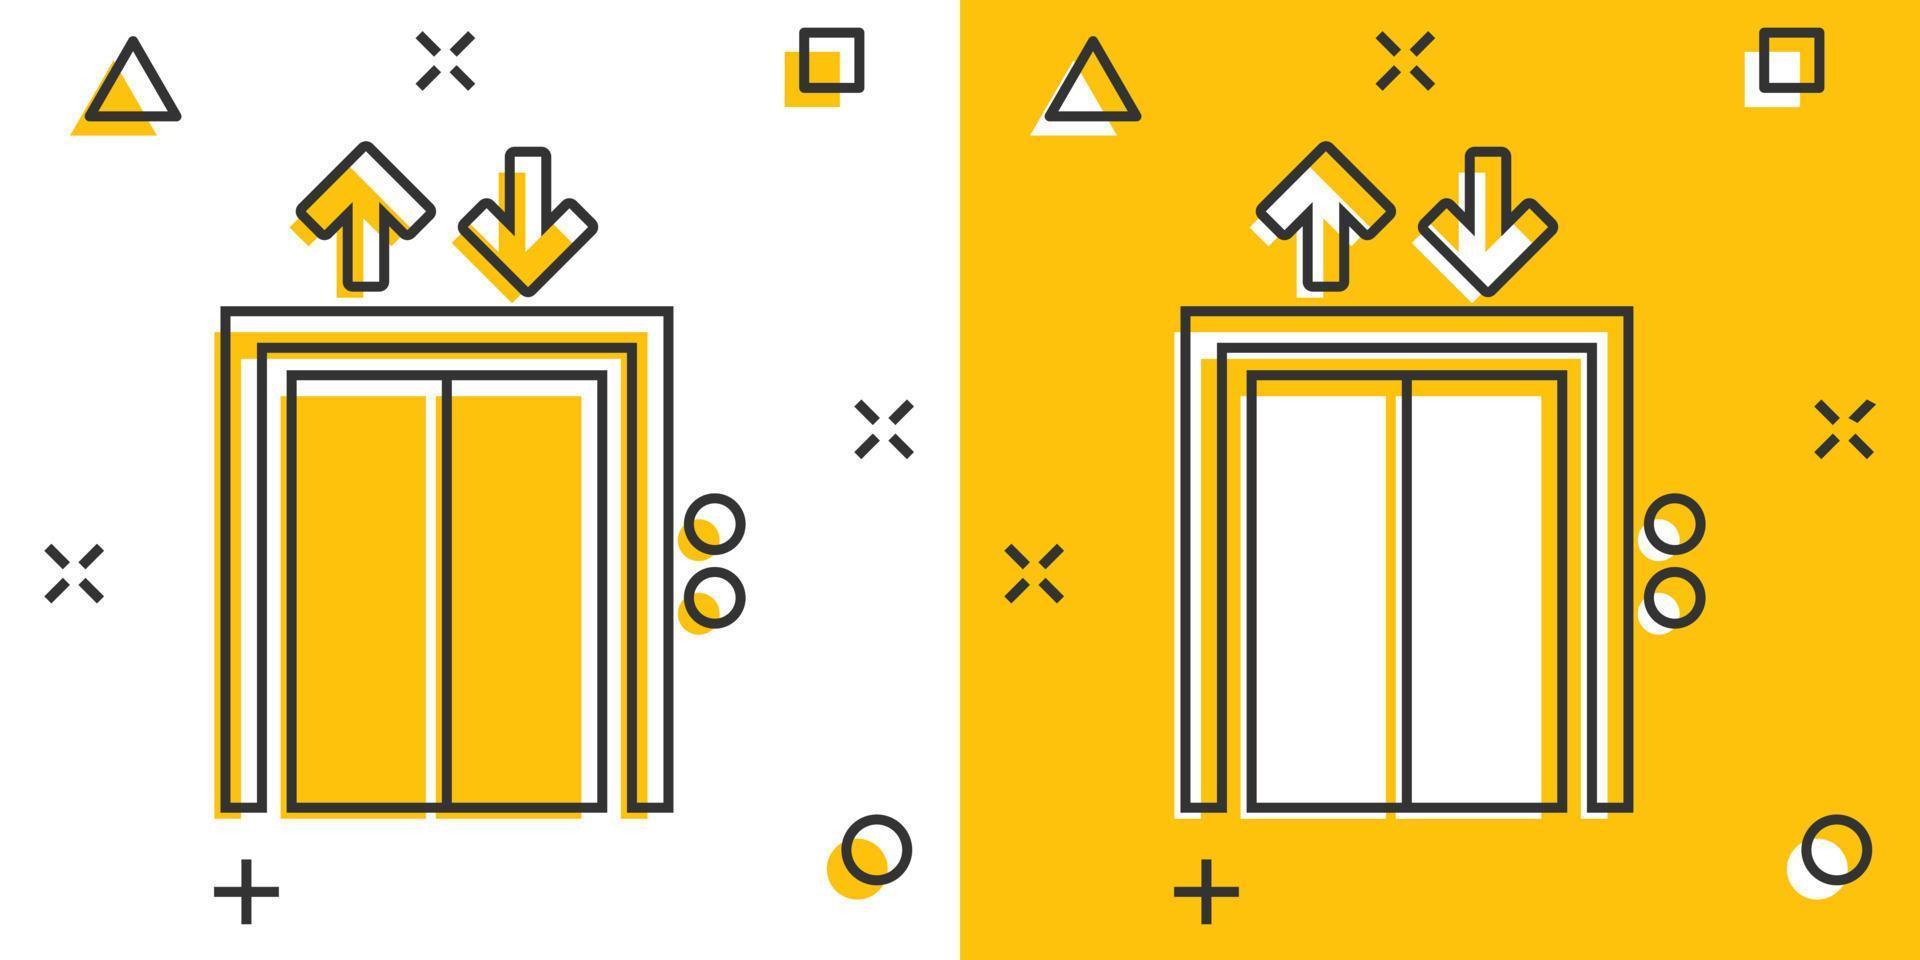 Elevator icon in comic style. Lift cartoon vector illustration on white isolated background. Passenger transportation splash effect business concept.